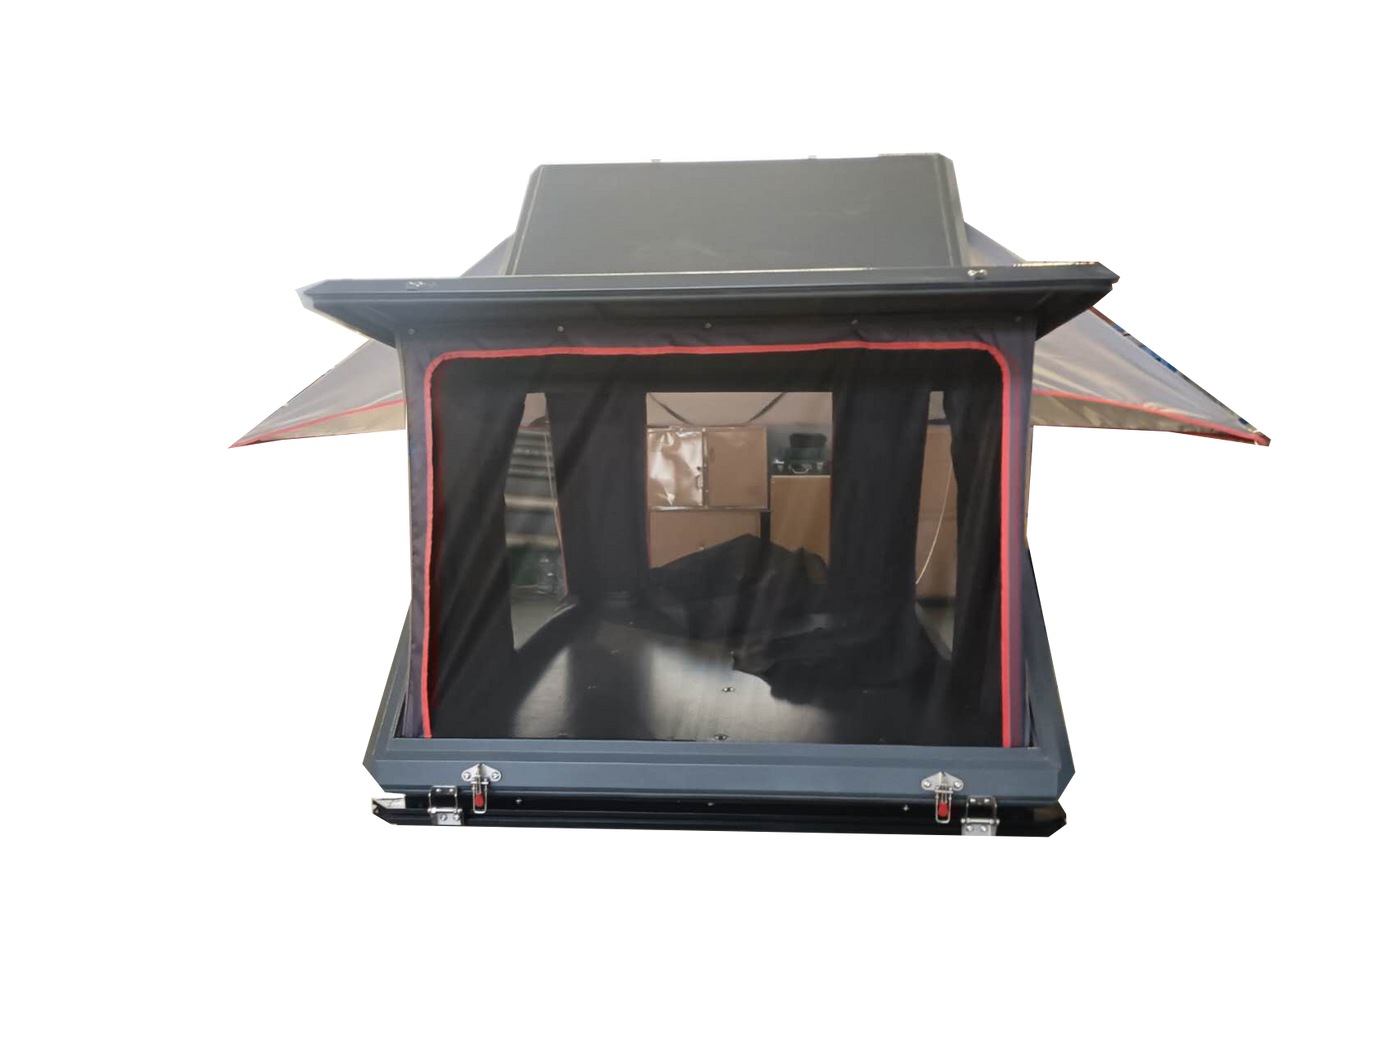 Adventure 130 Twin Pop Up Aluminum Roof Top Tent XC-03 (Pre Order) - OZI4X4 PTY LTD